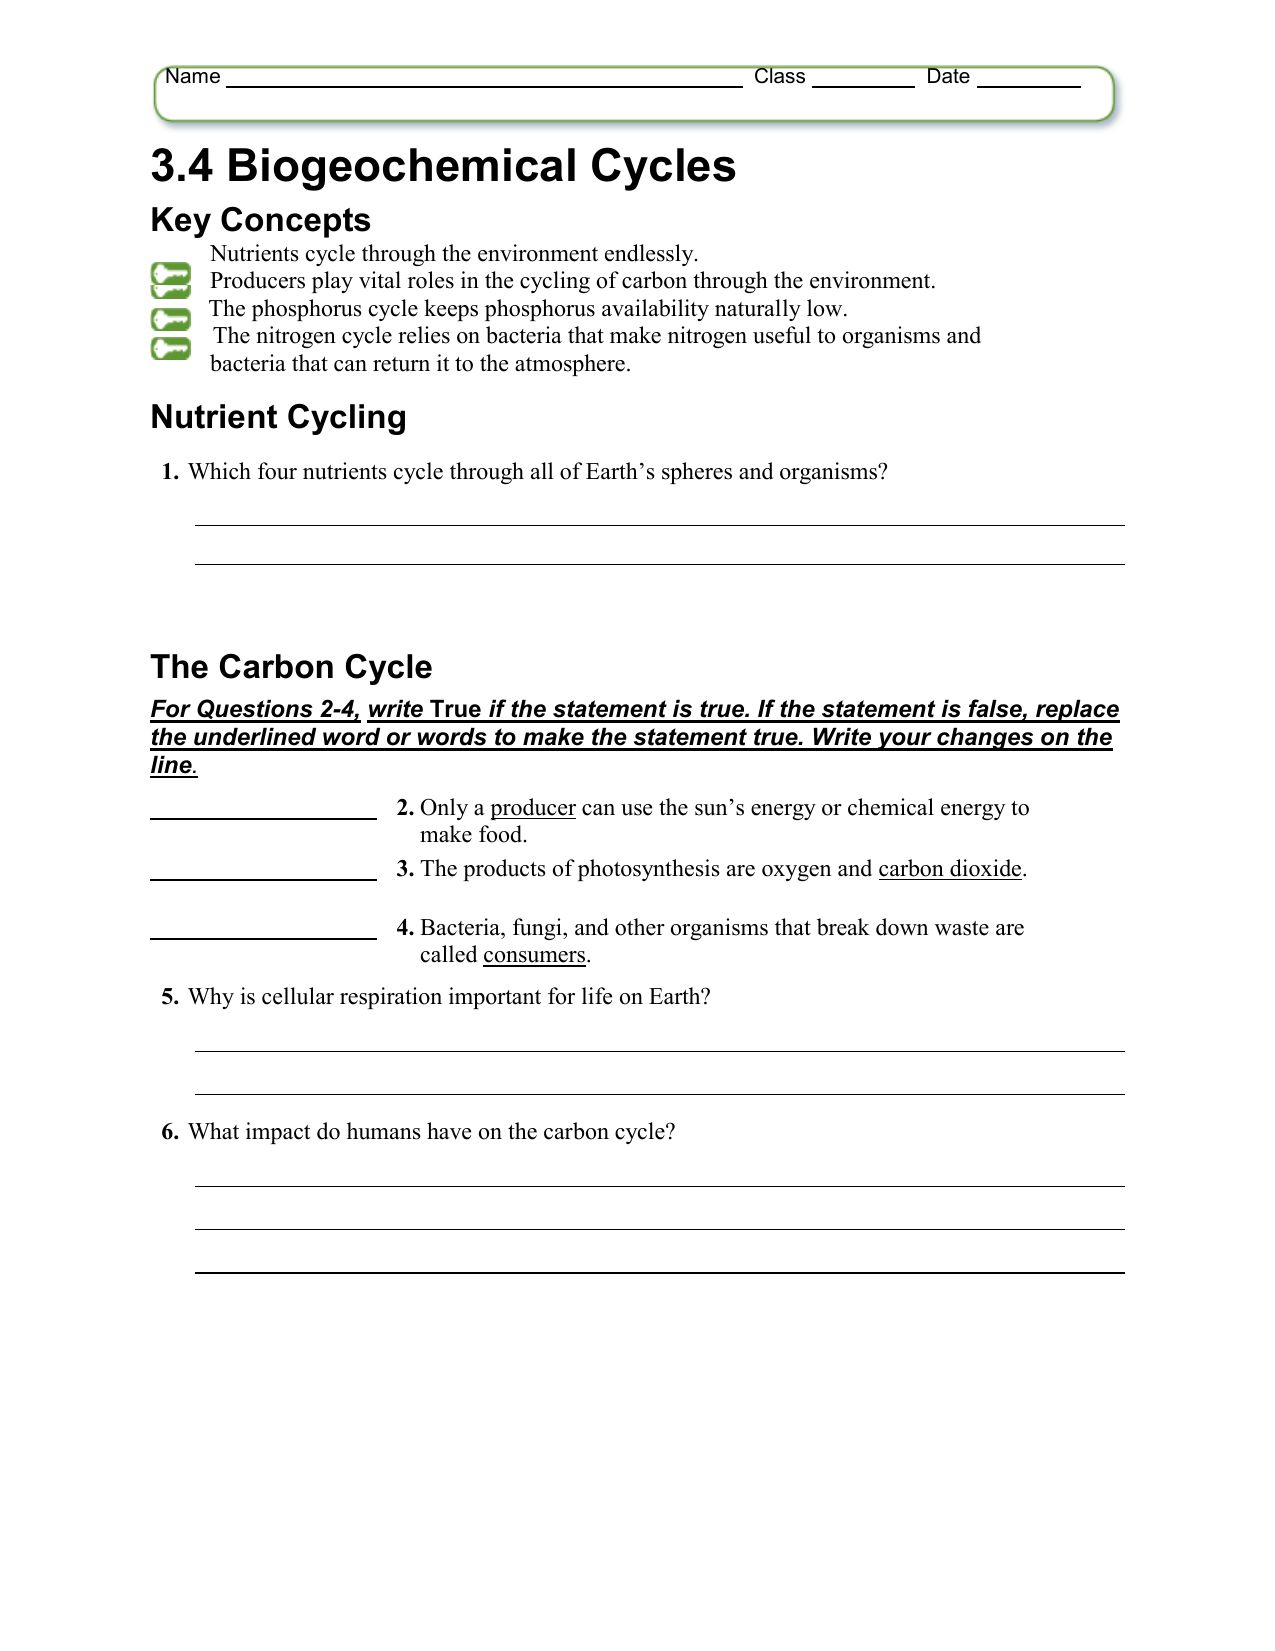 Nutrient Cycles Worksheet Answers - Nidecmege Inside Nutrient Cycles Worksheet Answers